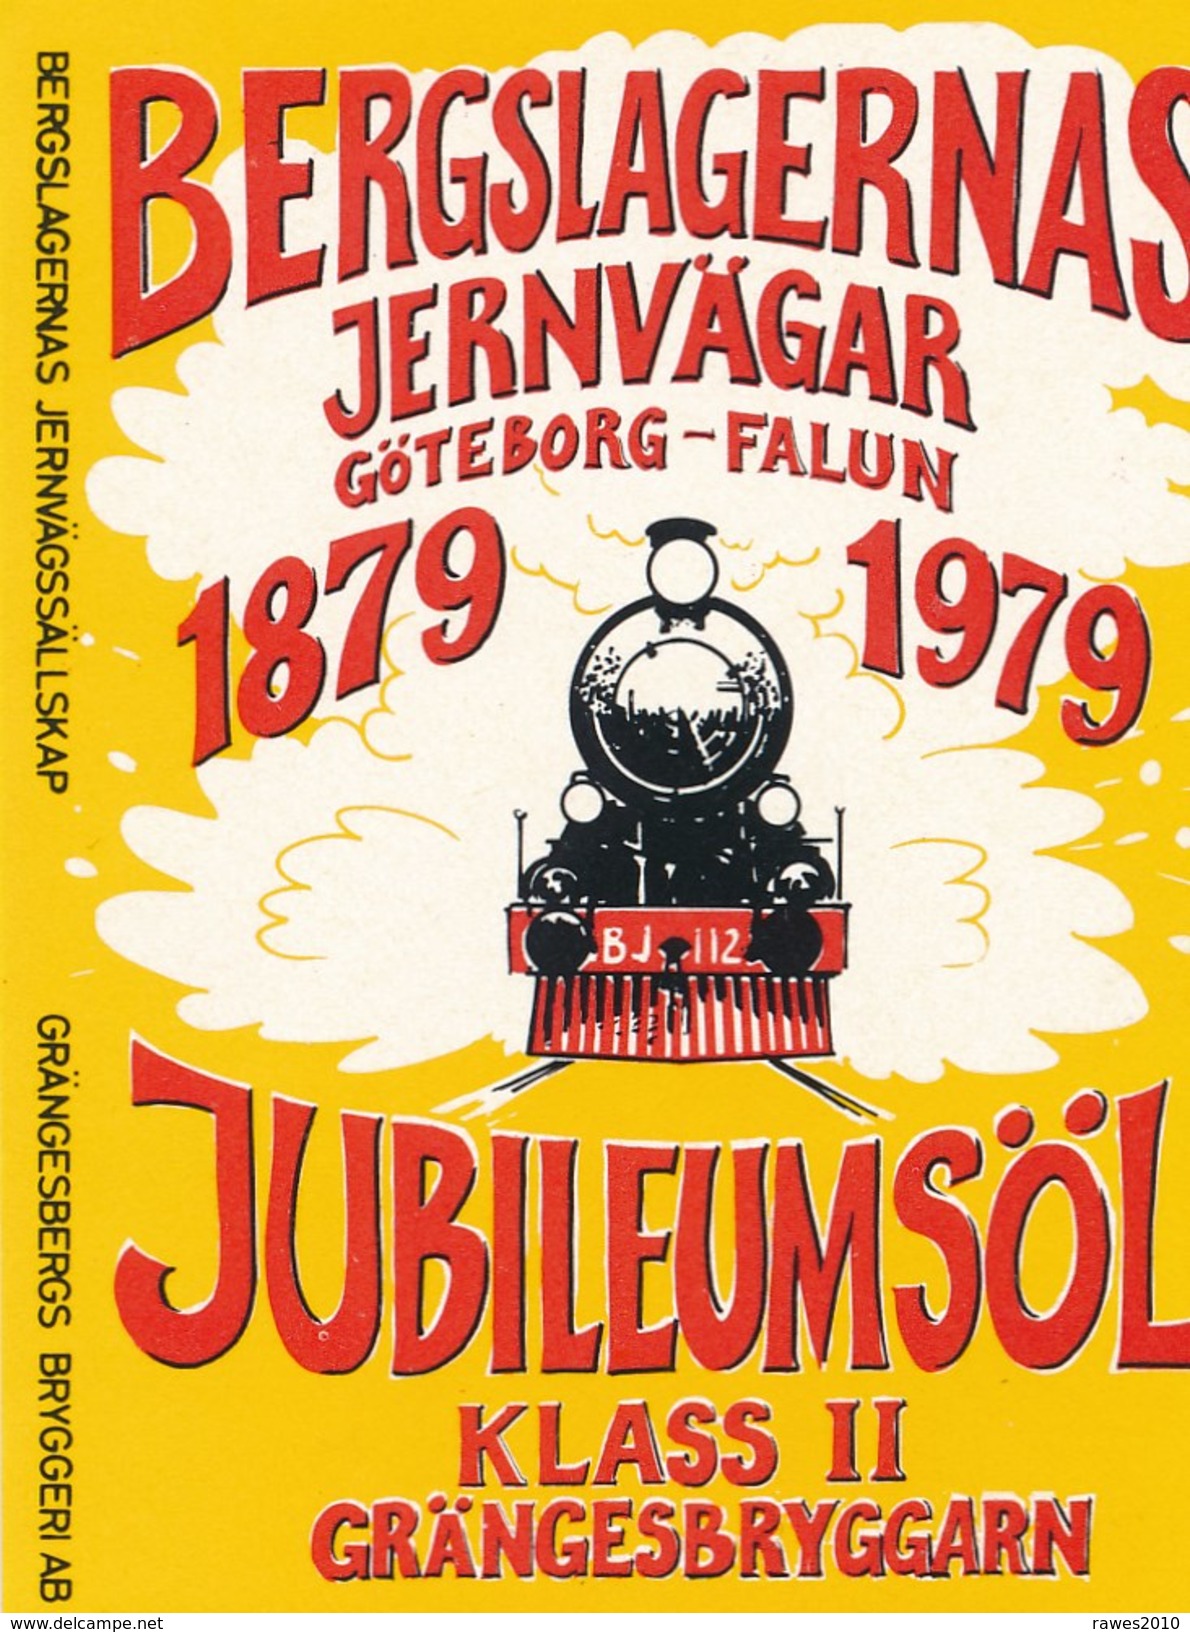 Schweden Eisenbahn Göteborg - Falun 1979 Lokomotive Bieretikett Jubileumsöl - Eisenbahnverkehr